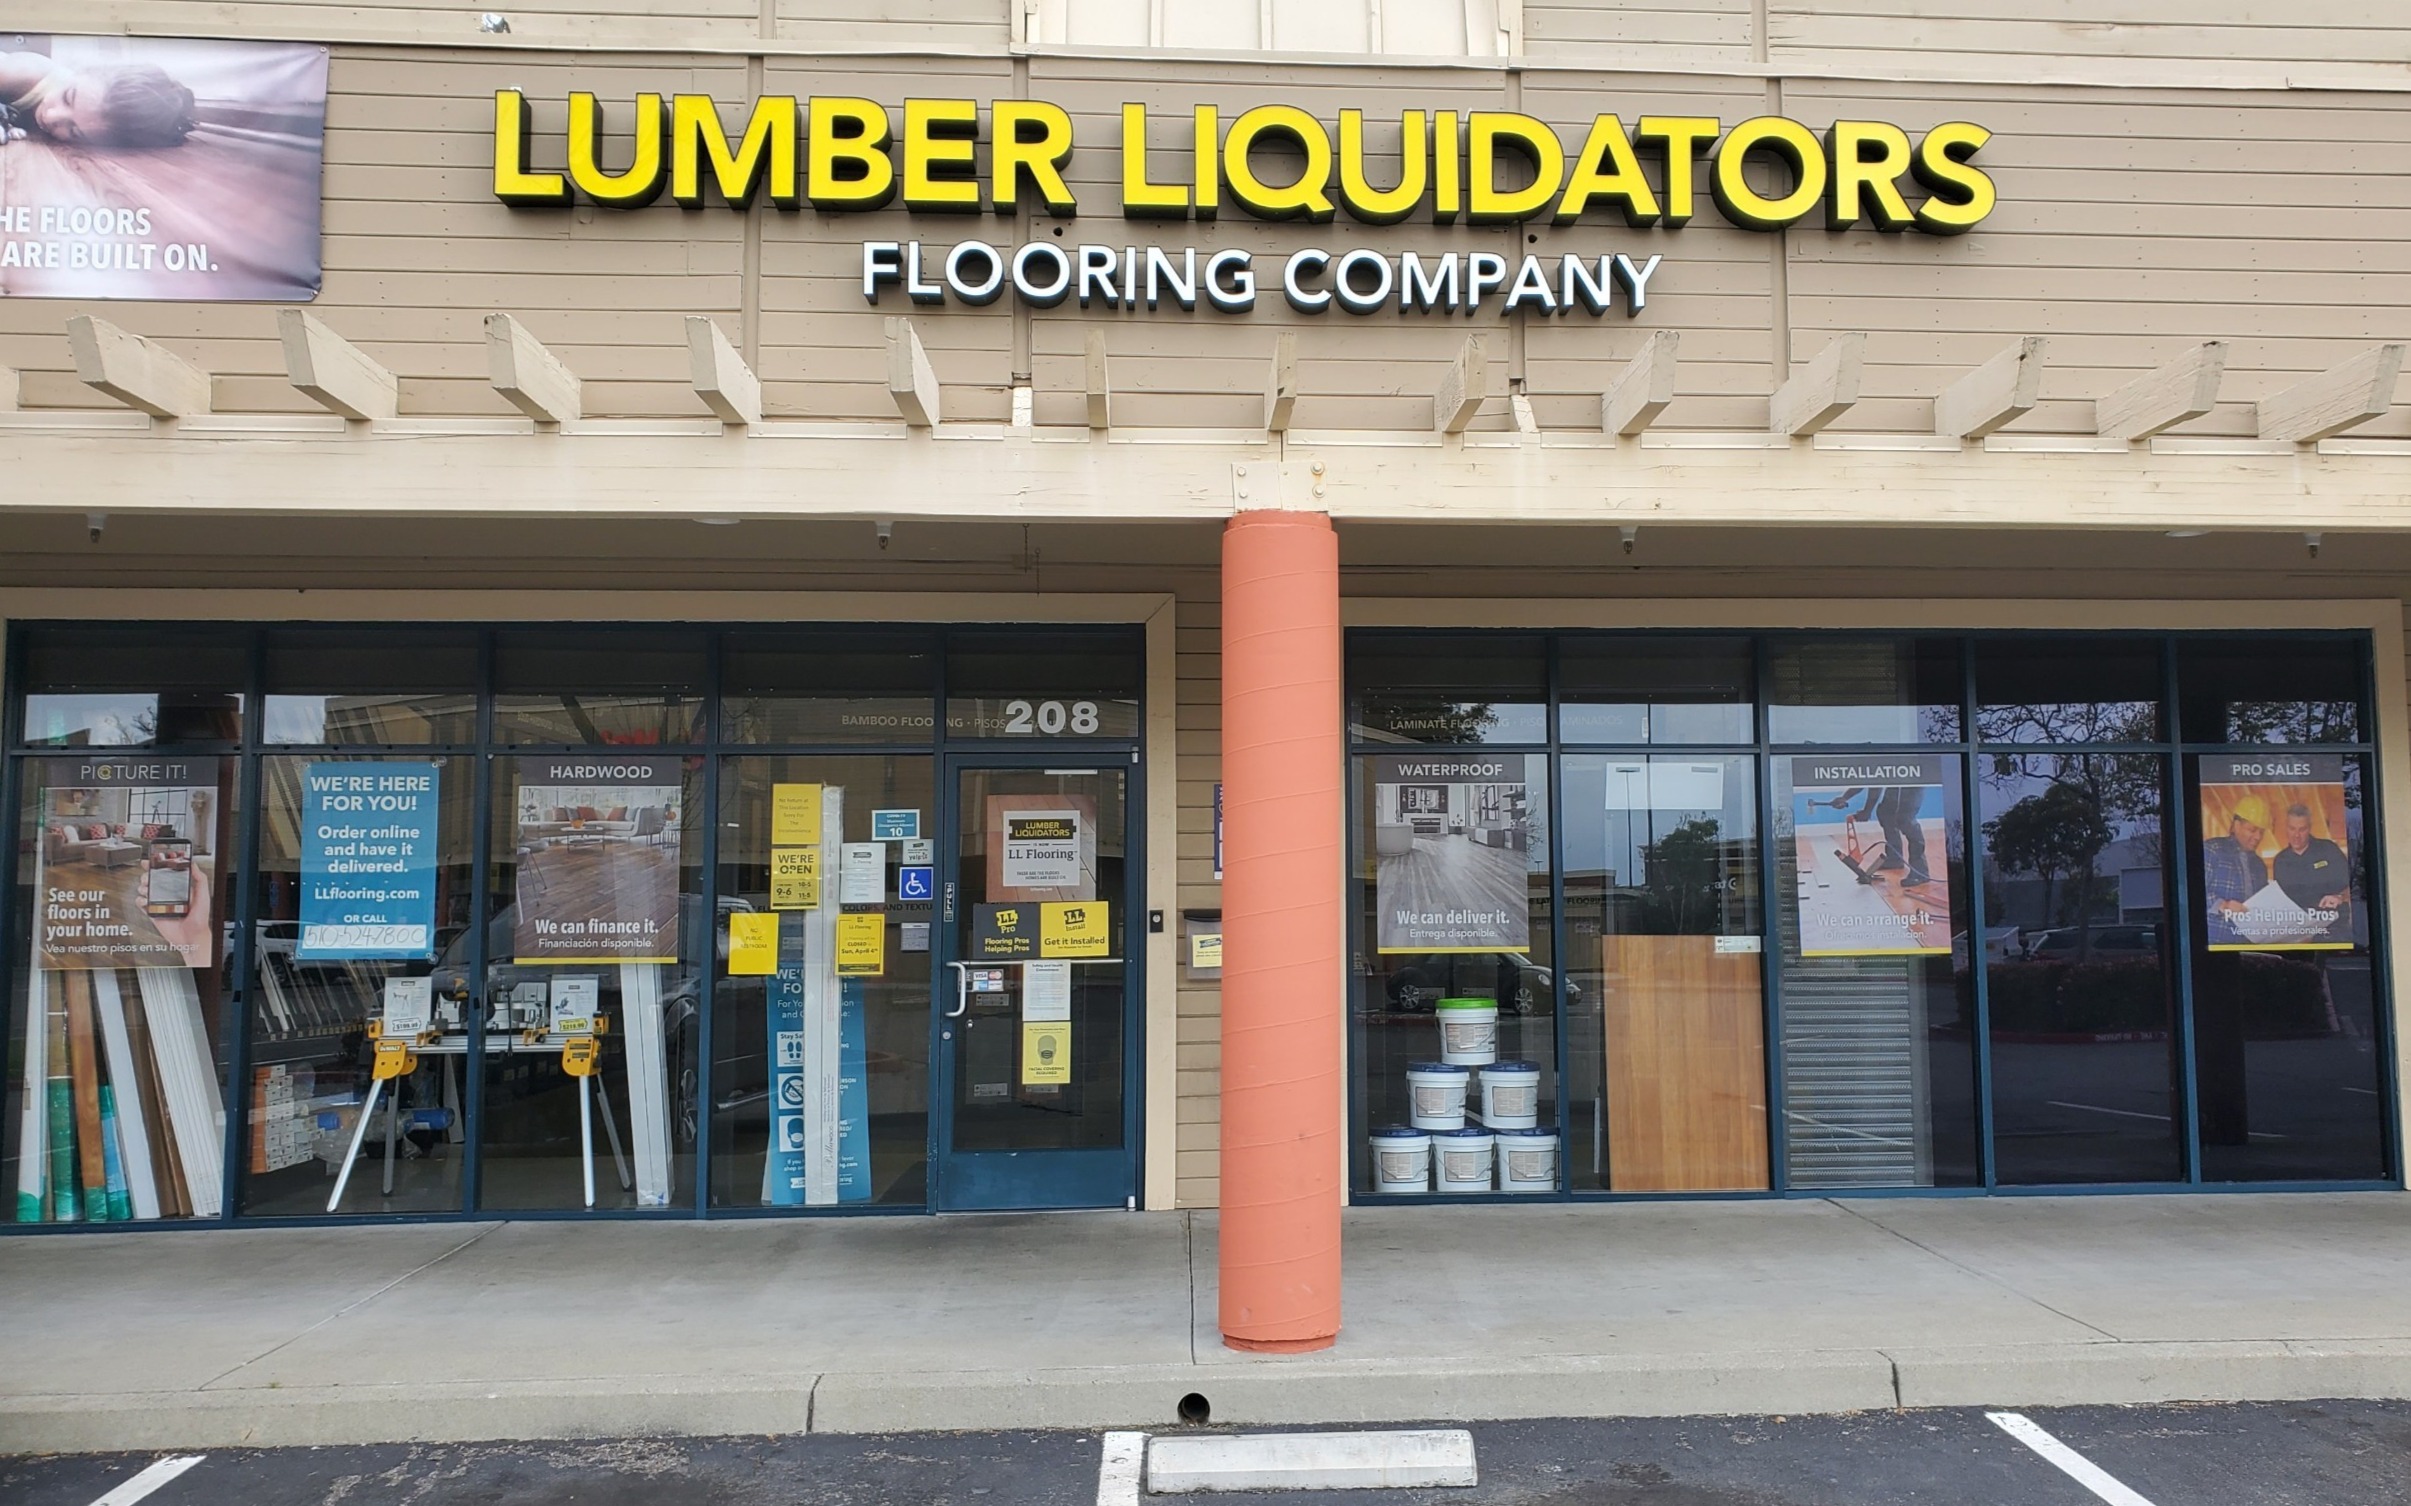 Ll Flooring Lumber Liquidators 1009, Lumber Liquidators Flooring Stockton Ca